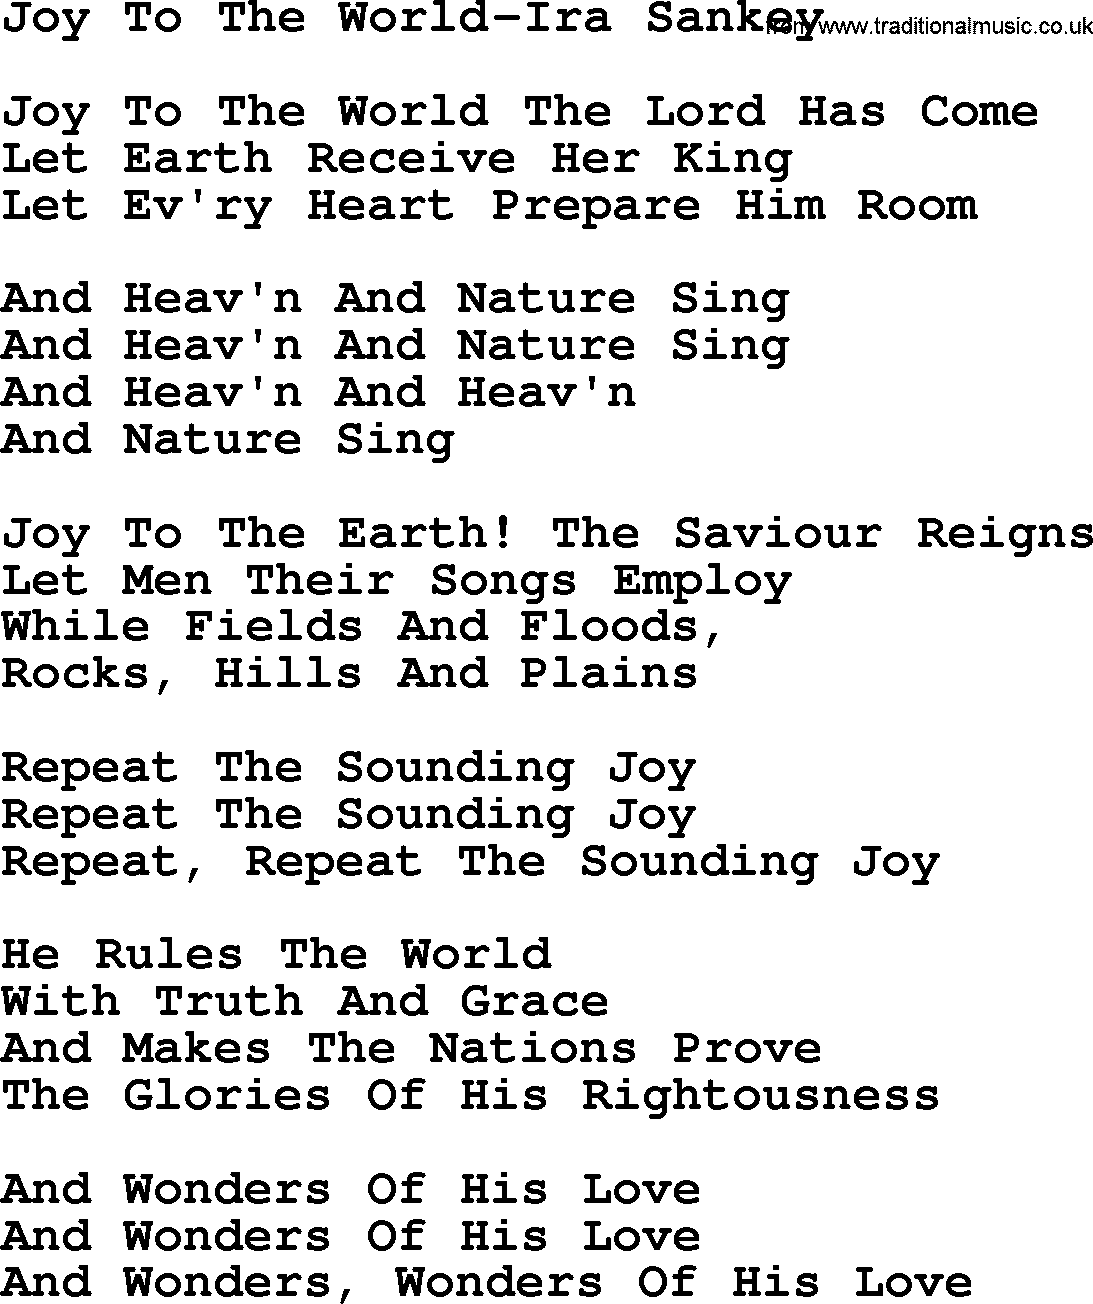 Joy To The World-Ira Sankey.txt by Ira Sankey - Christian Hymn lyrics